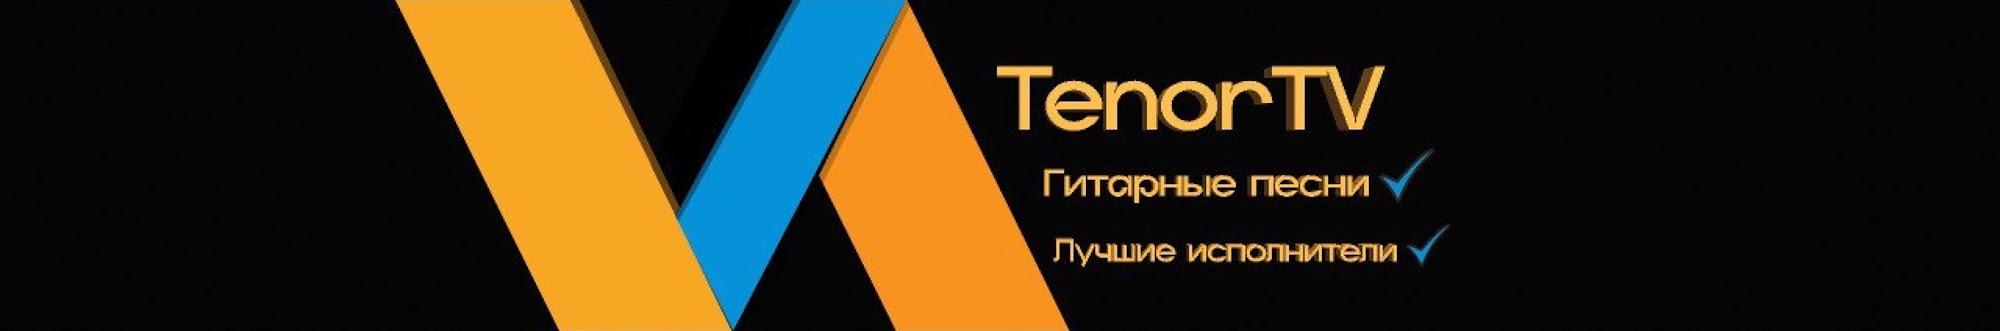 TenorTV